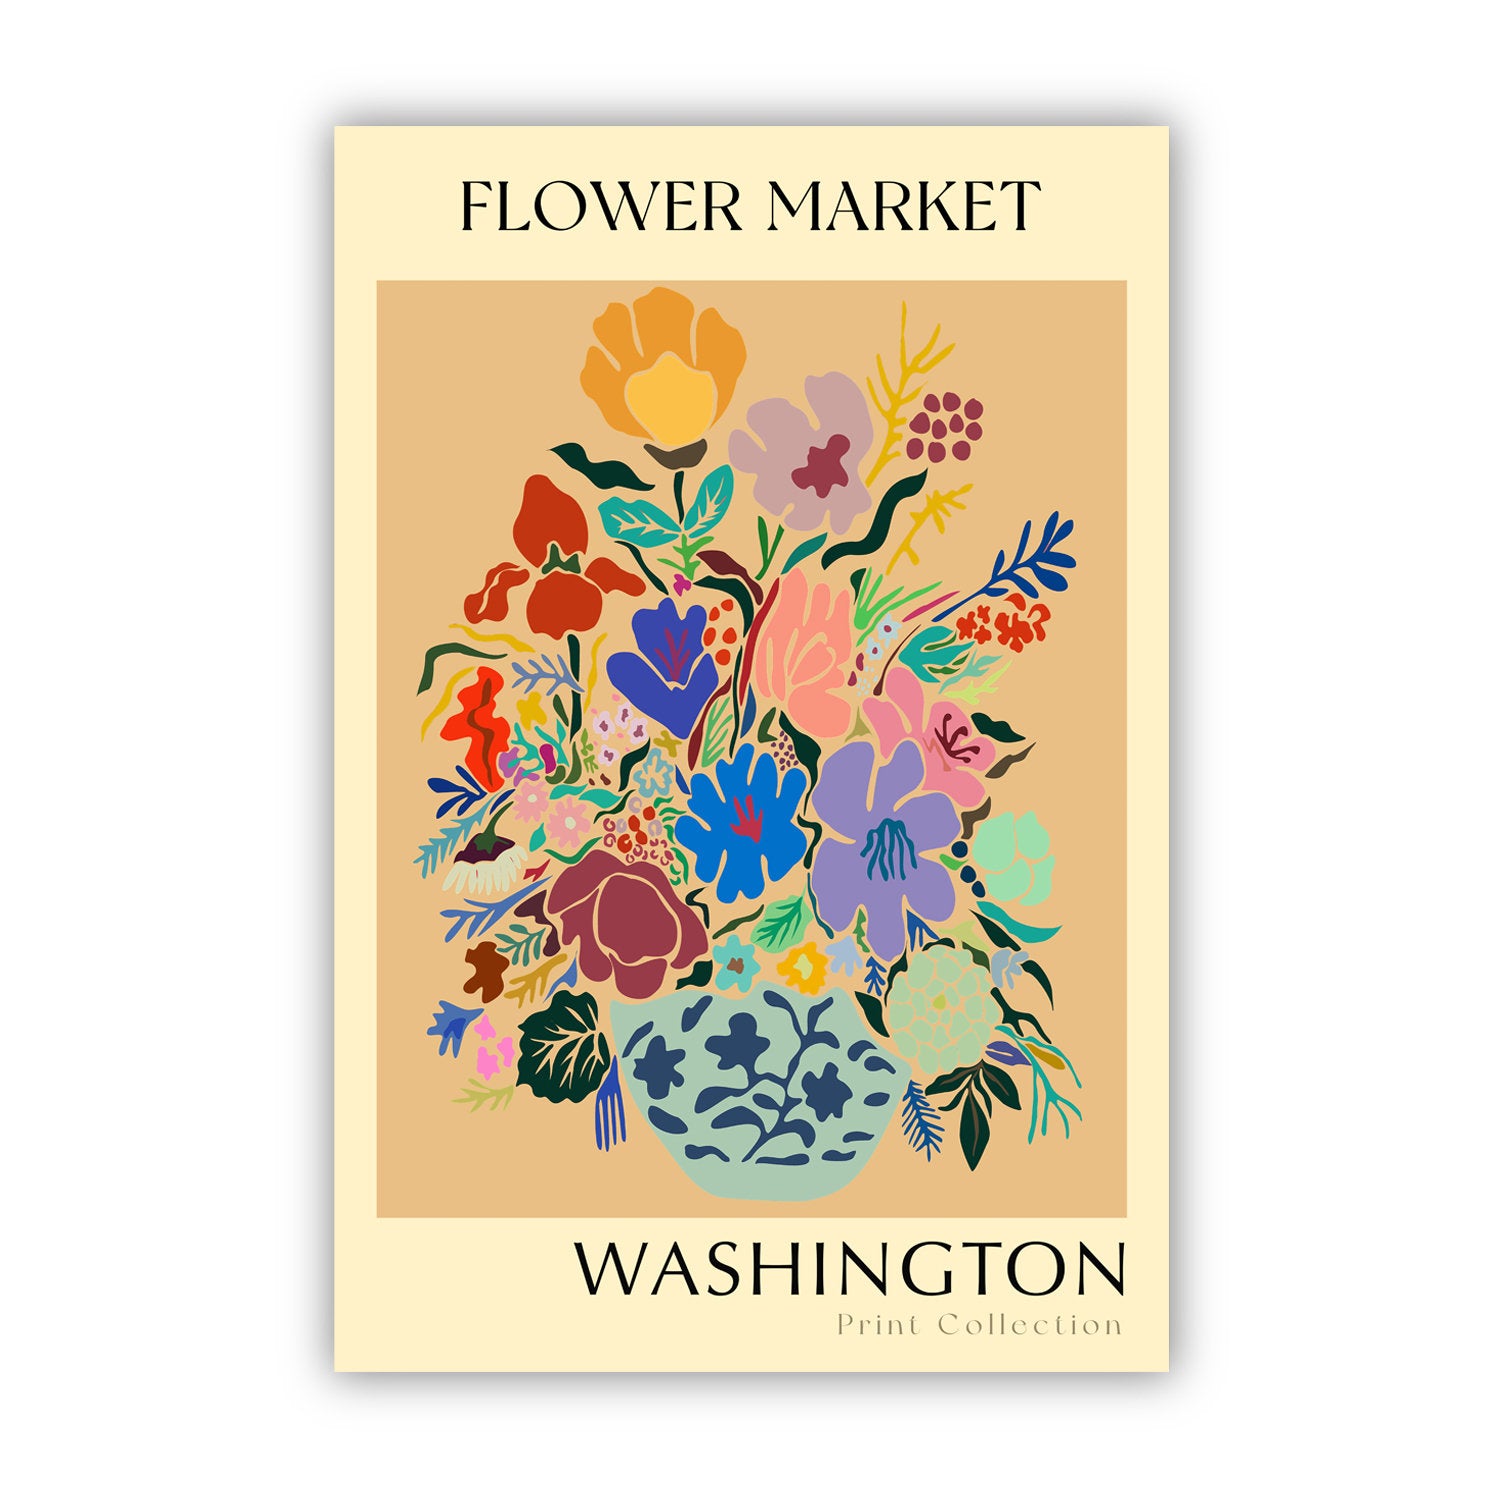 Washington State flower print, USA states poster, Washington flower market poster, Botanical poster, Nature poster artwork, Floral wall art